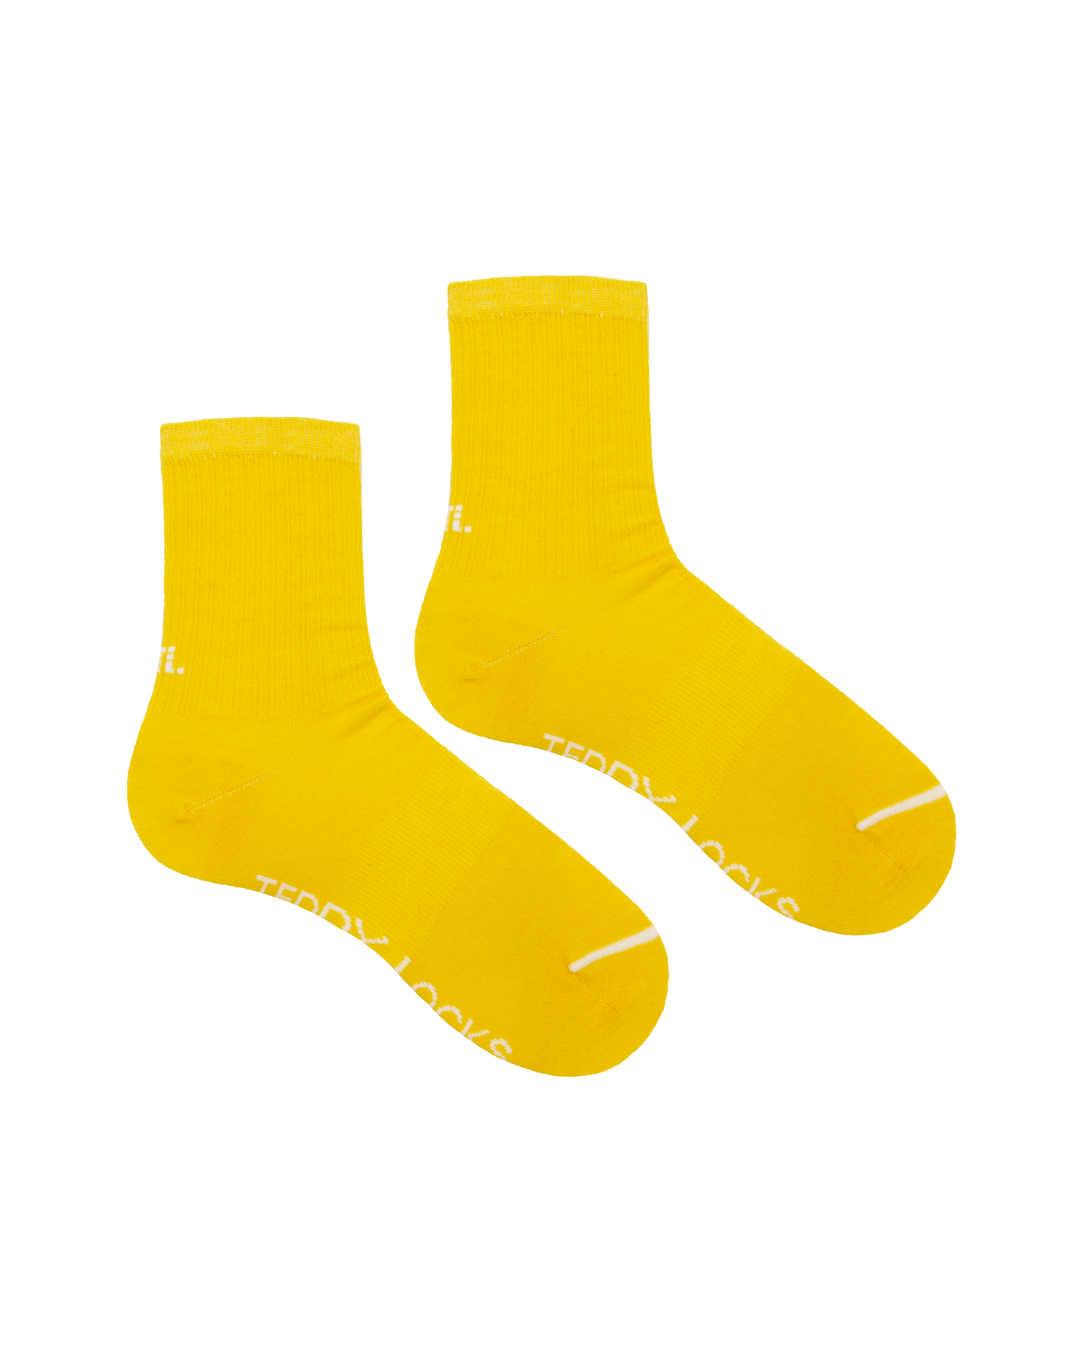 Yellow sport socks. Sustainable ribbed crew socks.